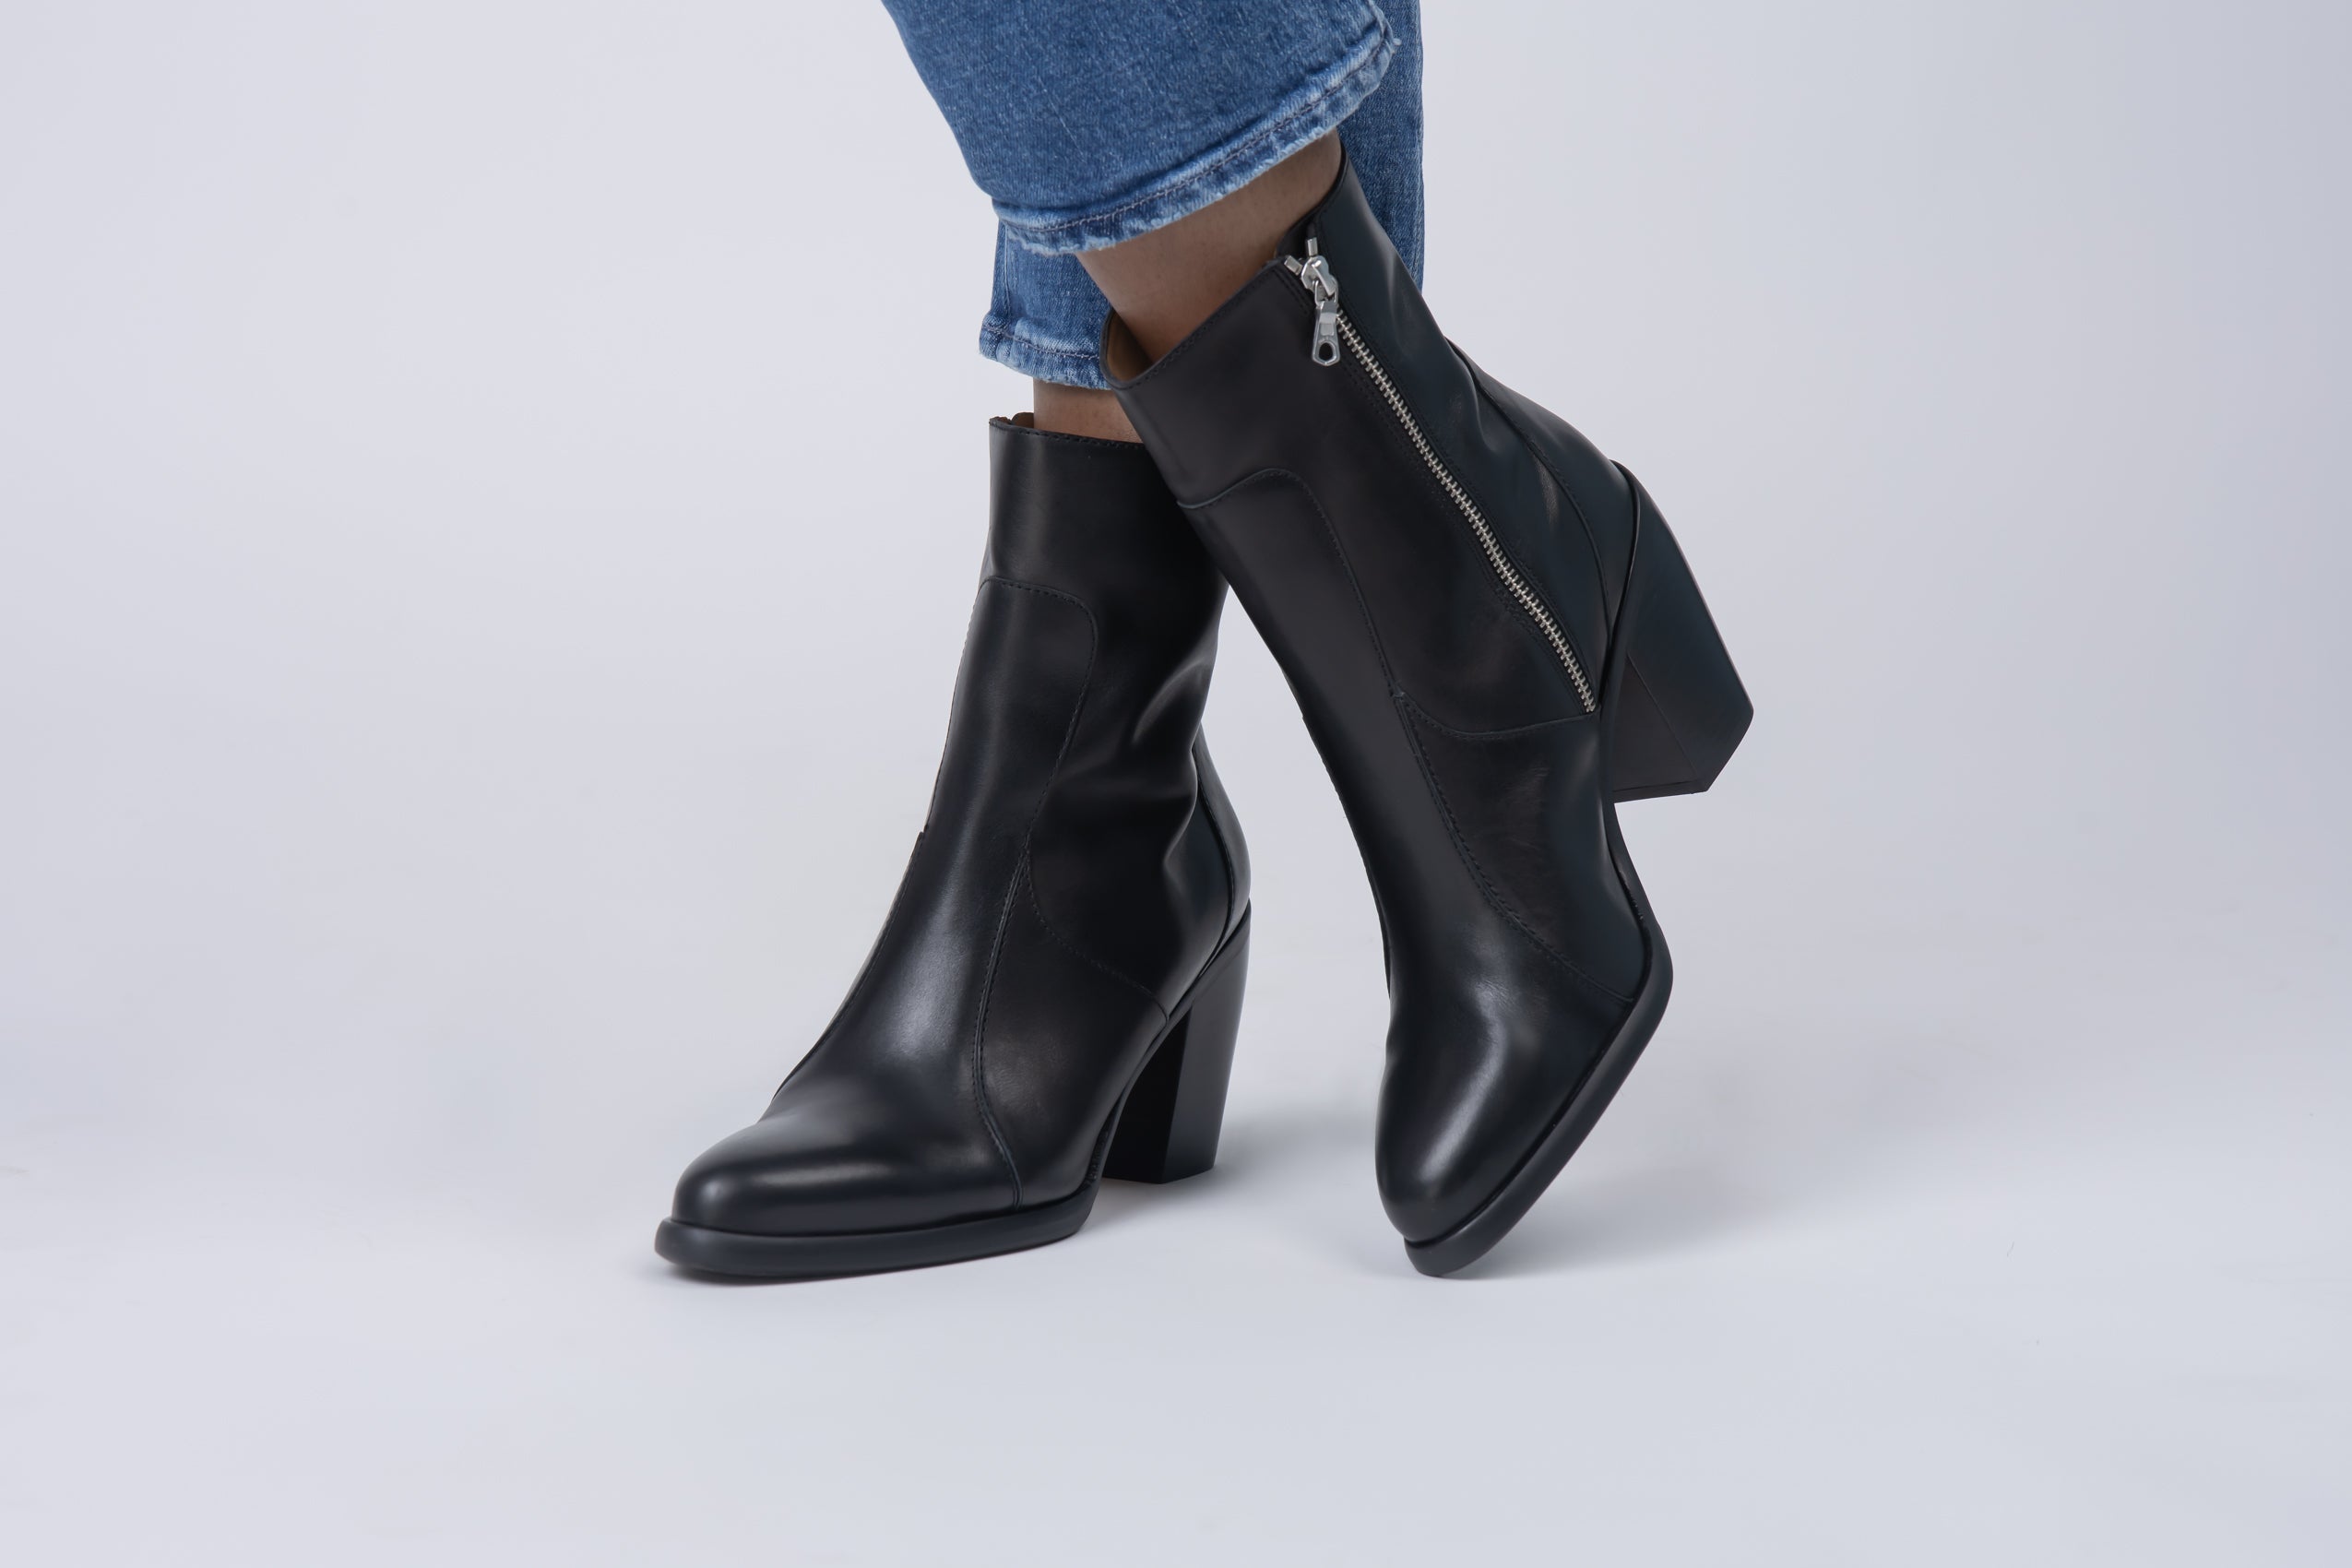 MissHeel Women's Platform Stiletto Heeled Ankle Boots Zip up Embellished  Boots with Metallic Chains Round Toe Autum Booties Nubuck Leather Black  Shoes Size 2: Amazon.co.uk: Fashion